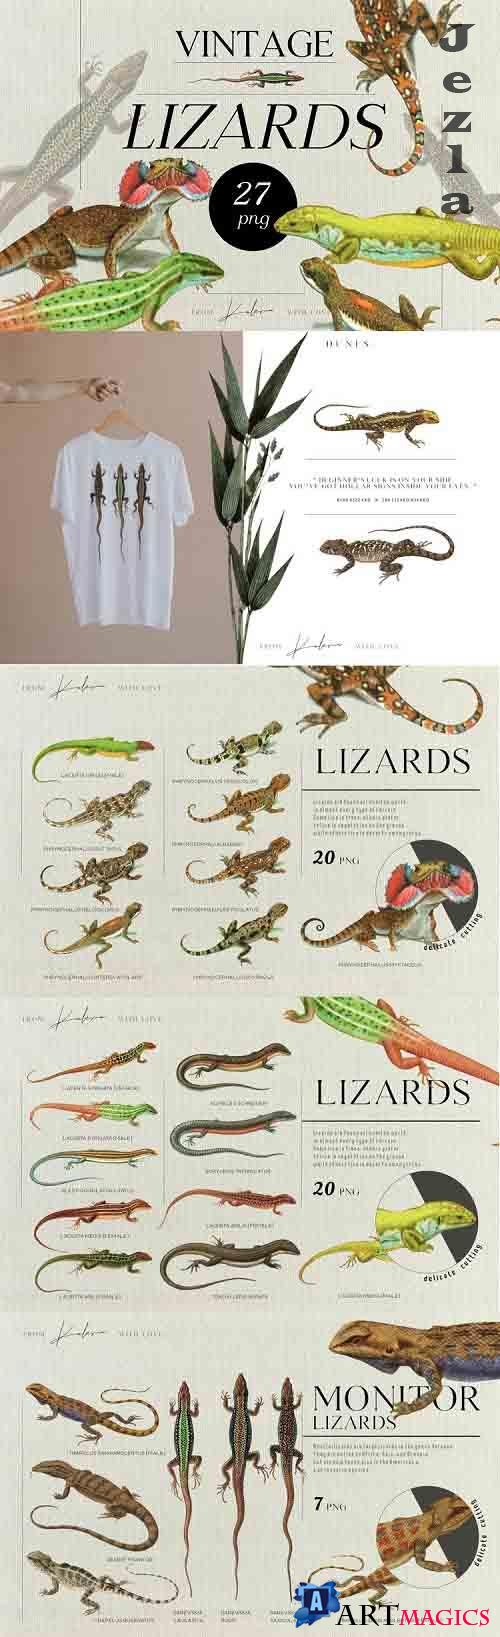 Vintage lizards - retro illustrations set - 756826